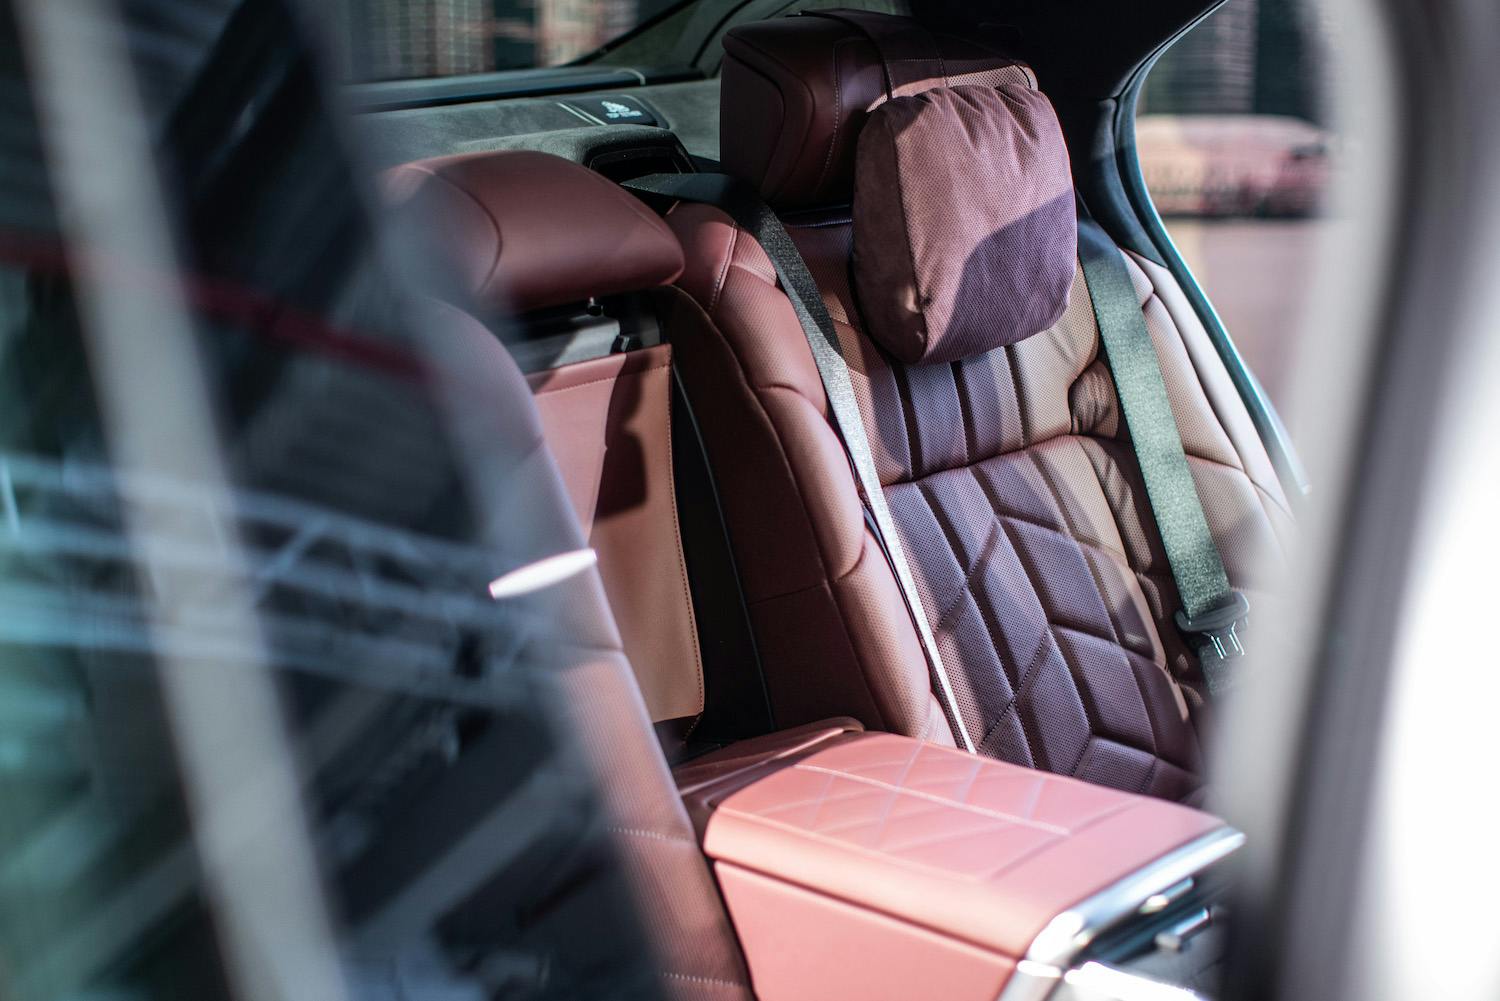 BMW 760i Euro Model interior rear seats showroom